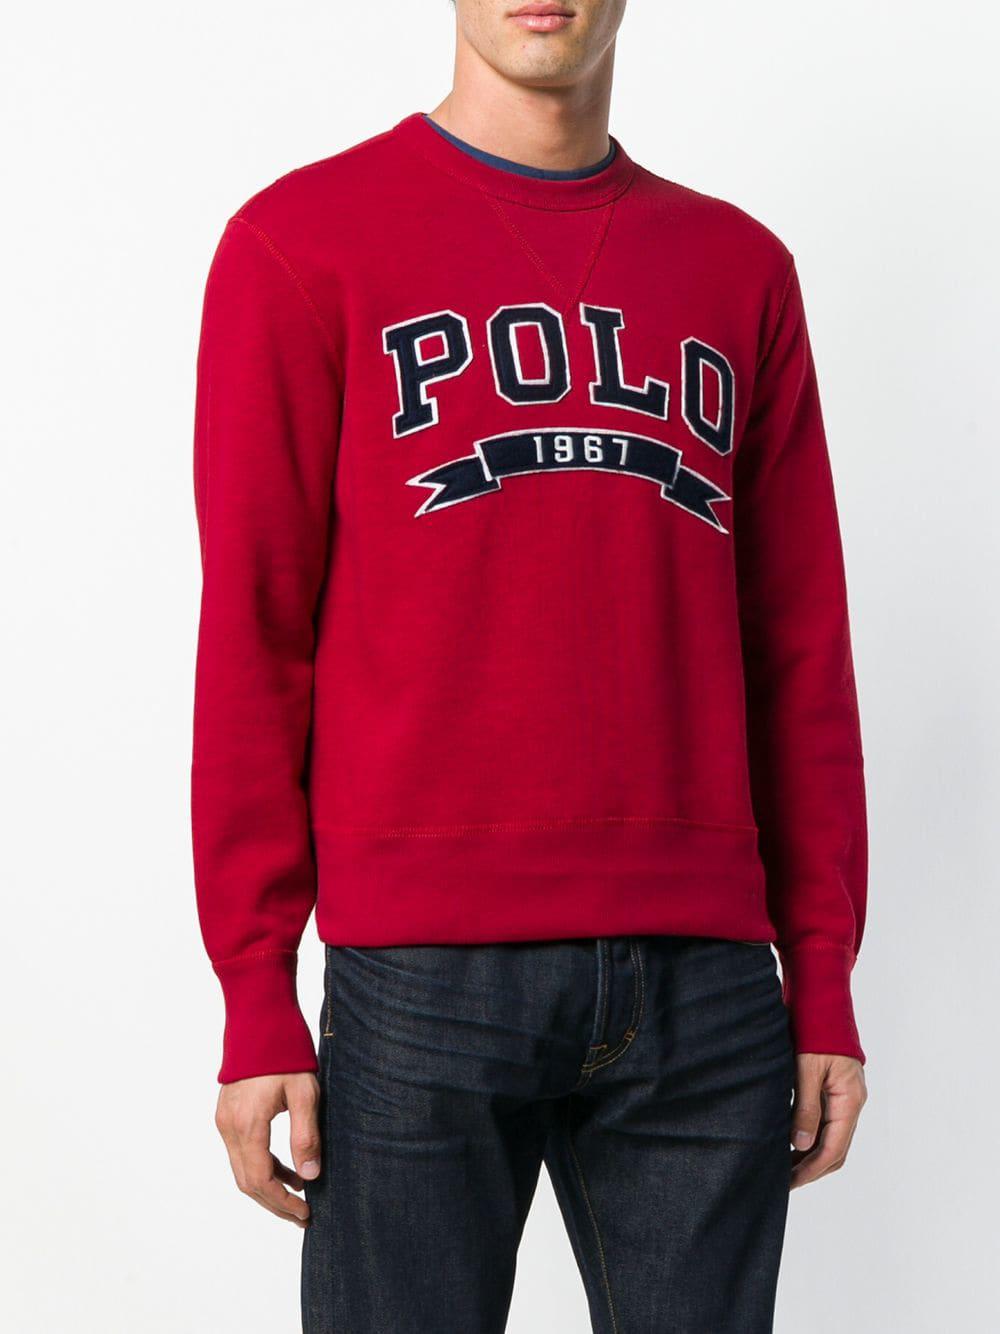 Polo Ralph Lauren Polo 1967 Sweatshirt Red for |